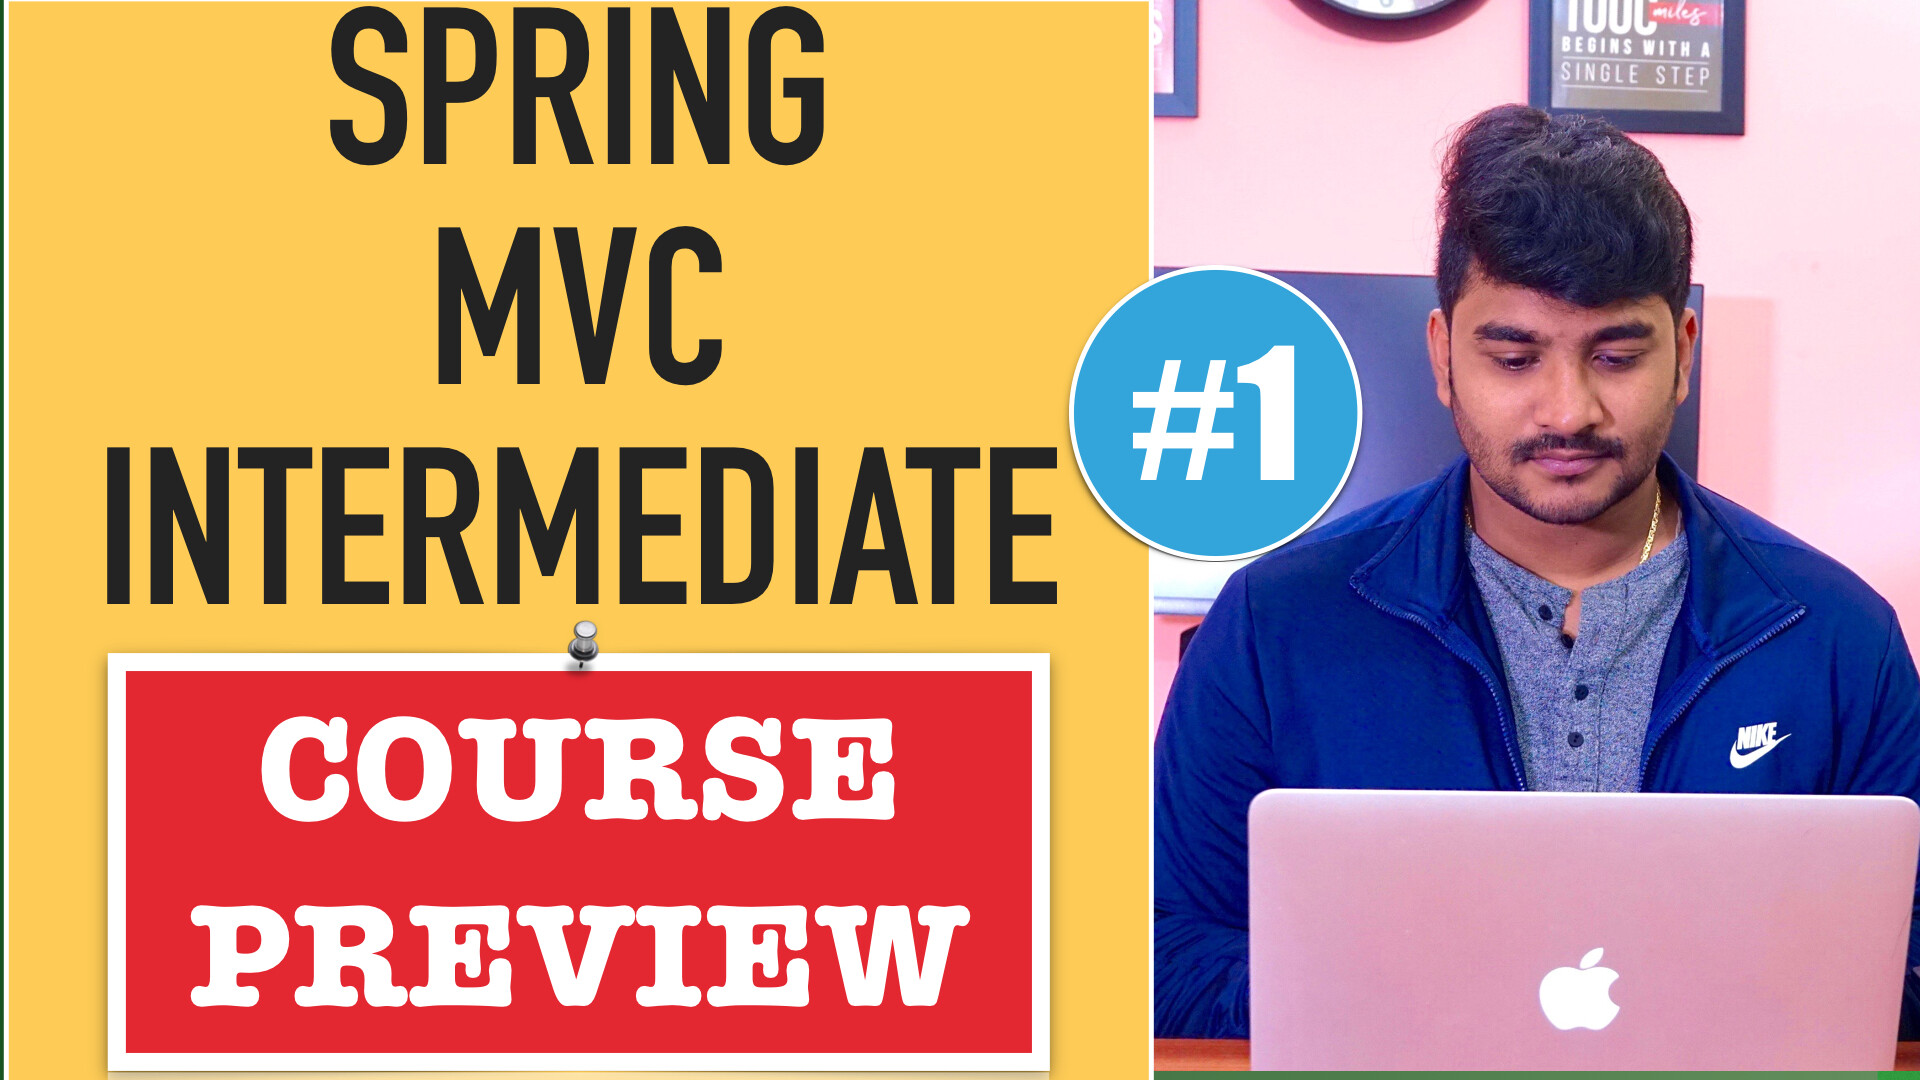 Spring MVC course thumb